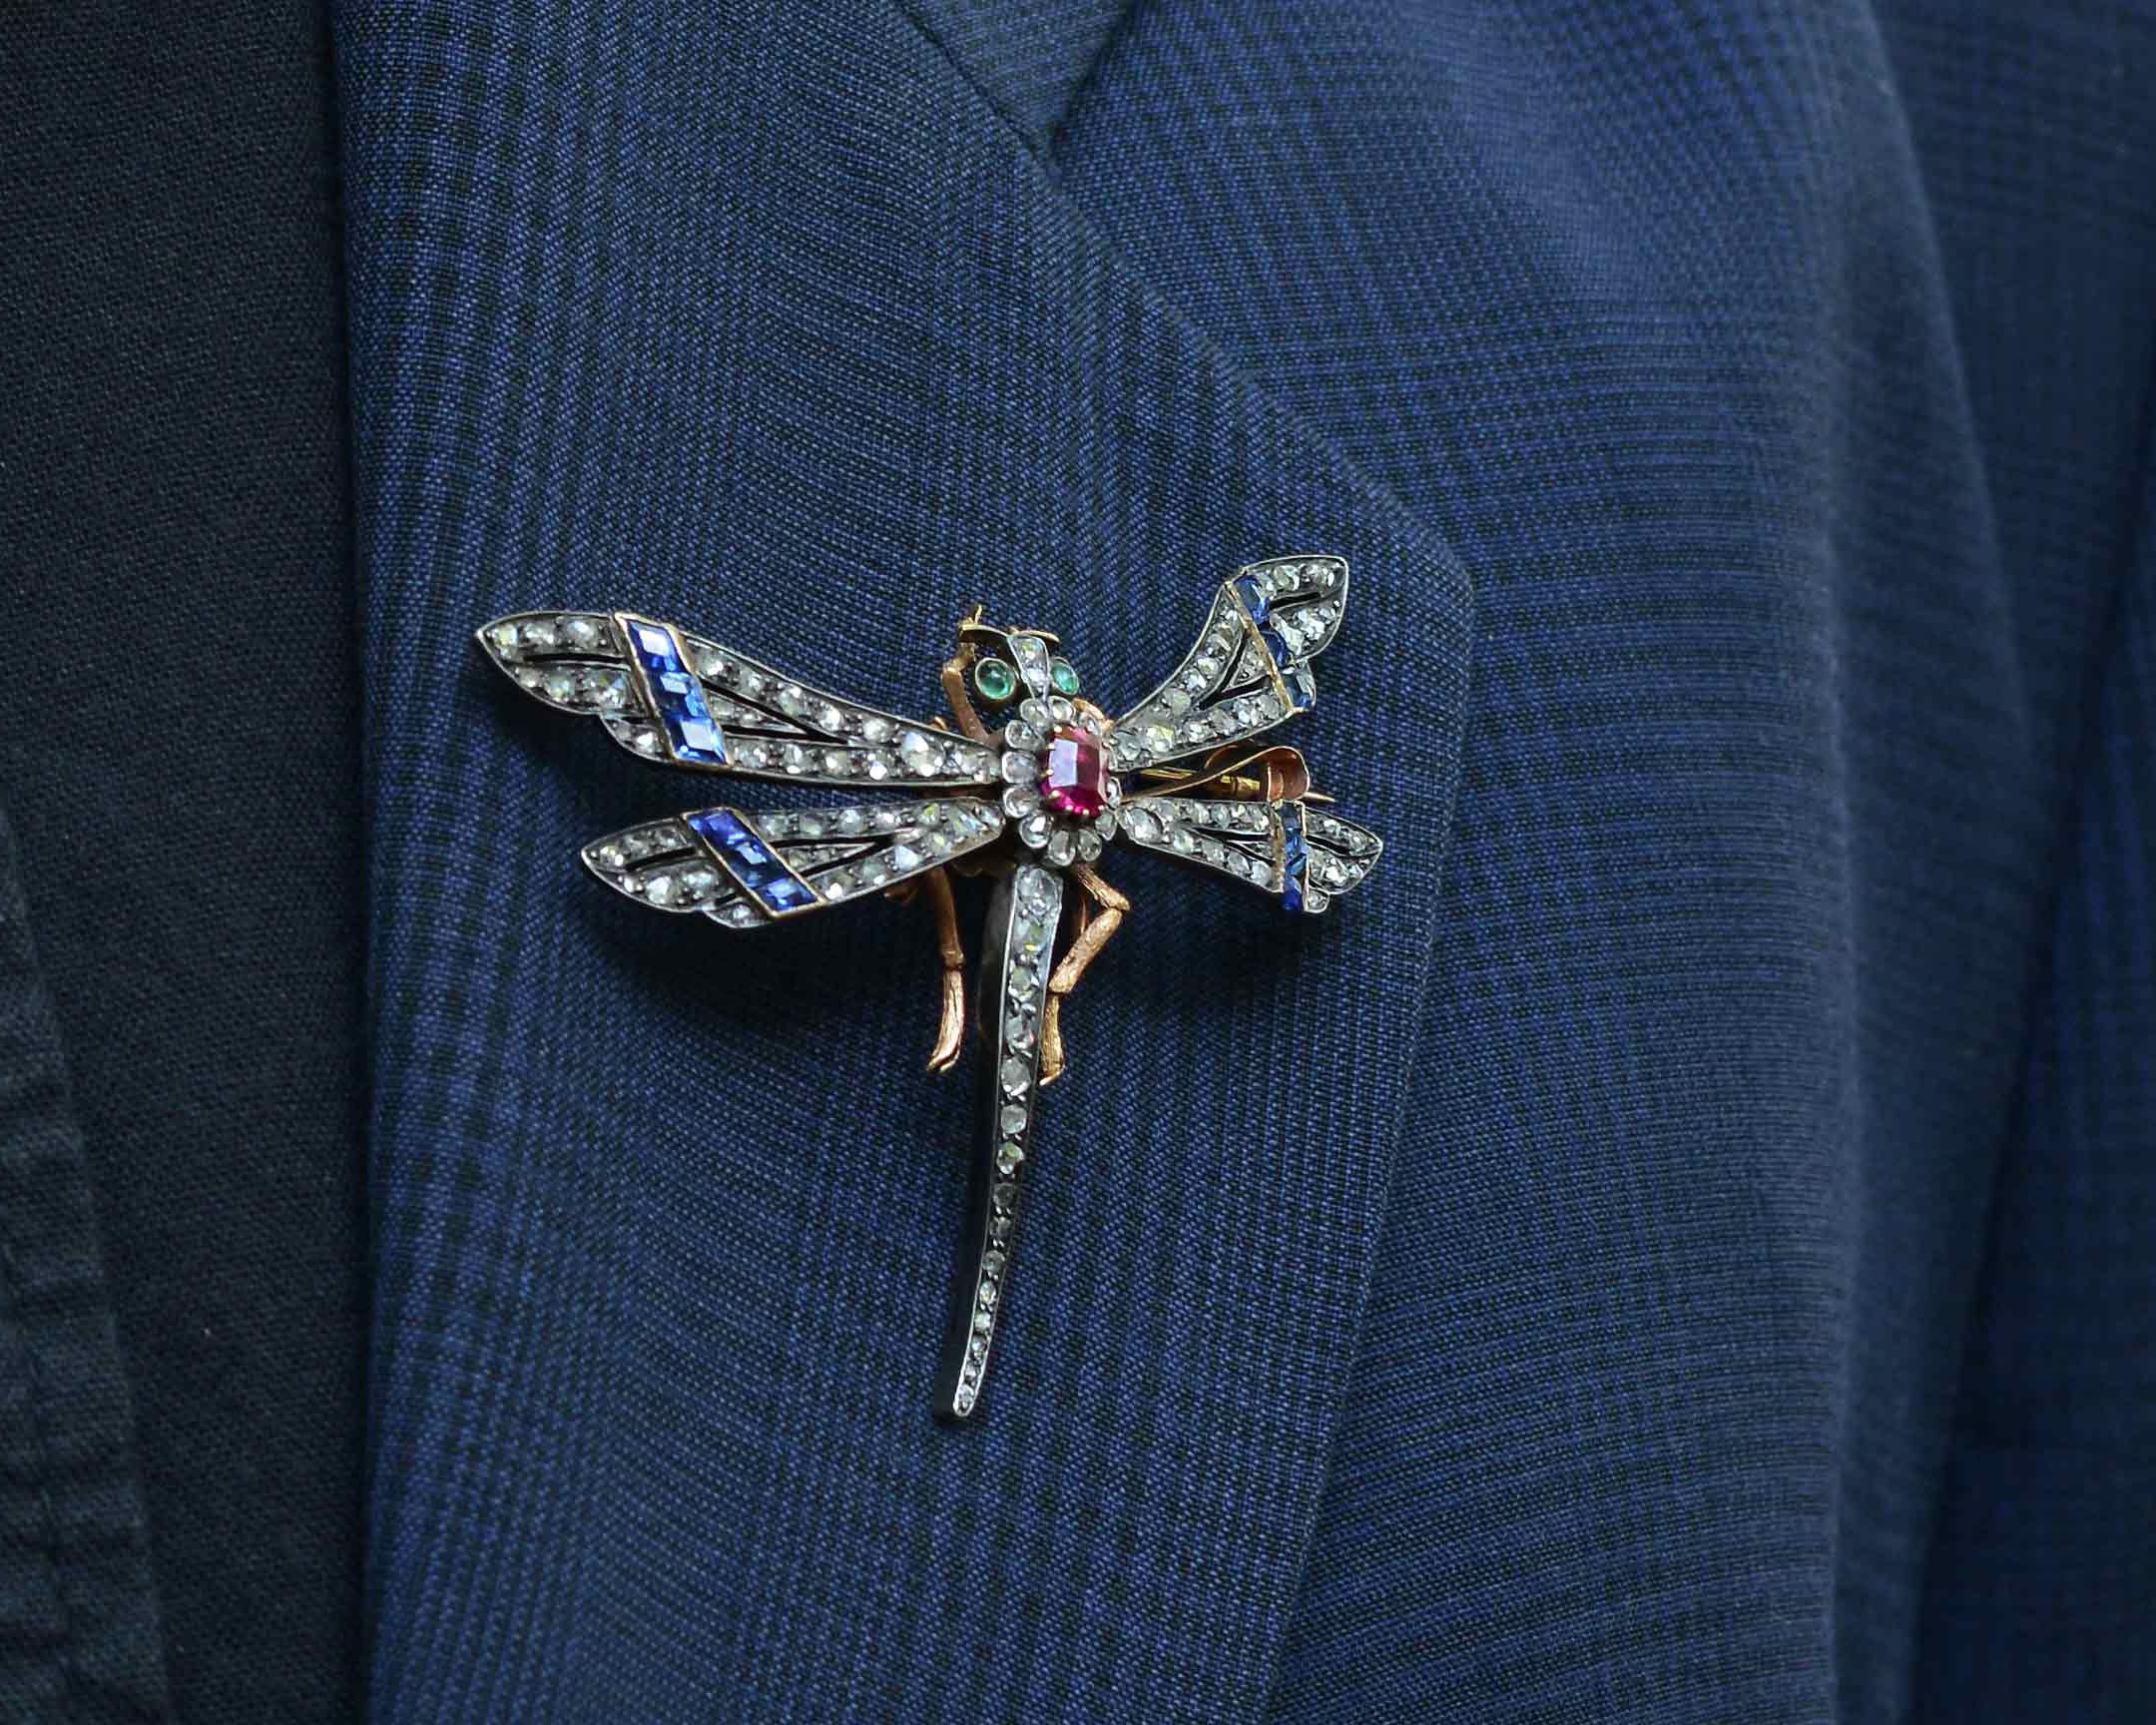 Antique Victorian En Tremblant Diamond Dragonfly Brooch